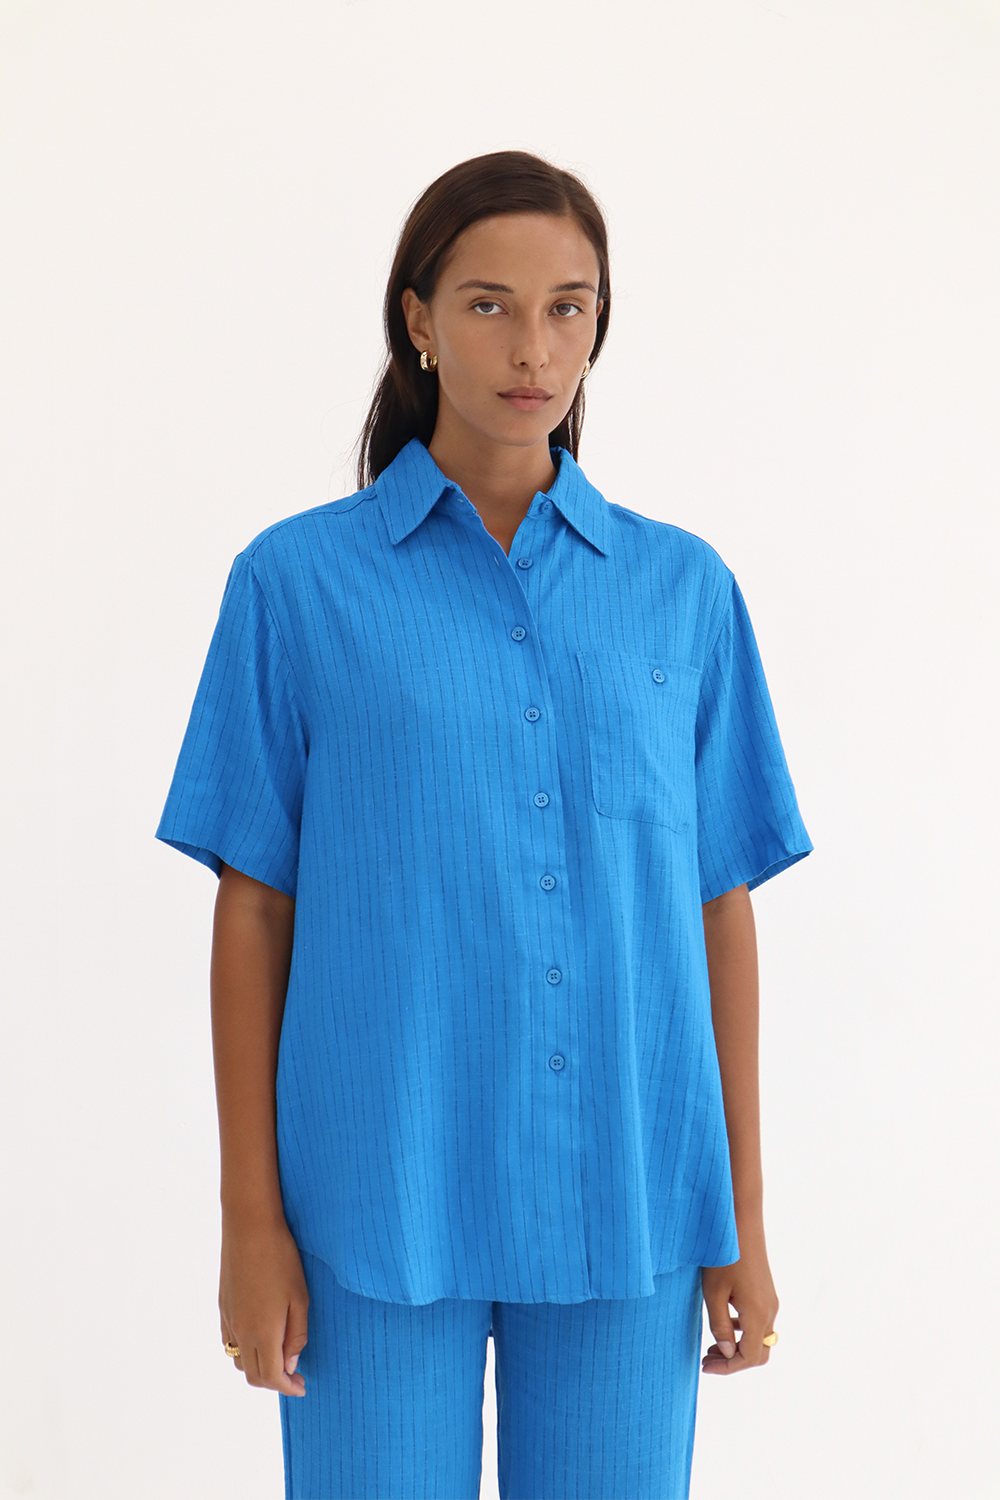 Genevieve in Shirt in Blue